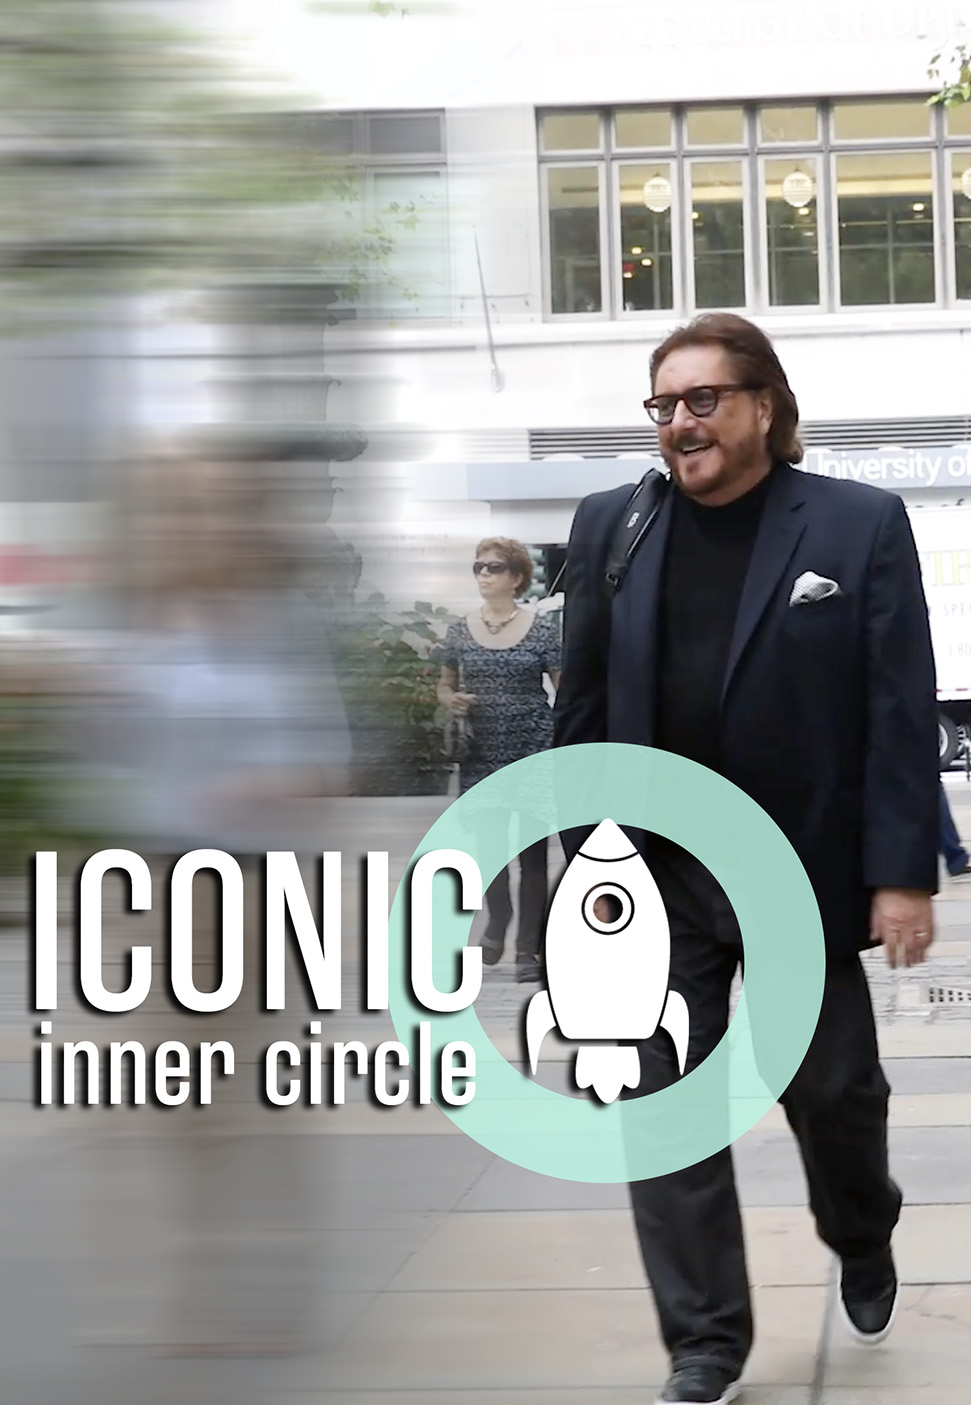 ICONIC inner circle with Scott McKain